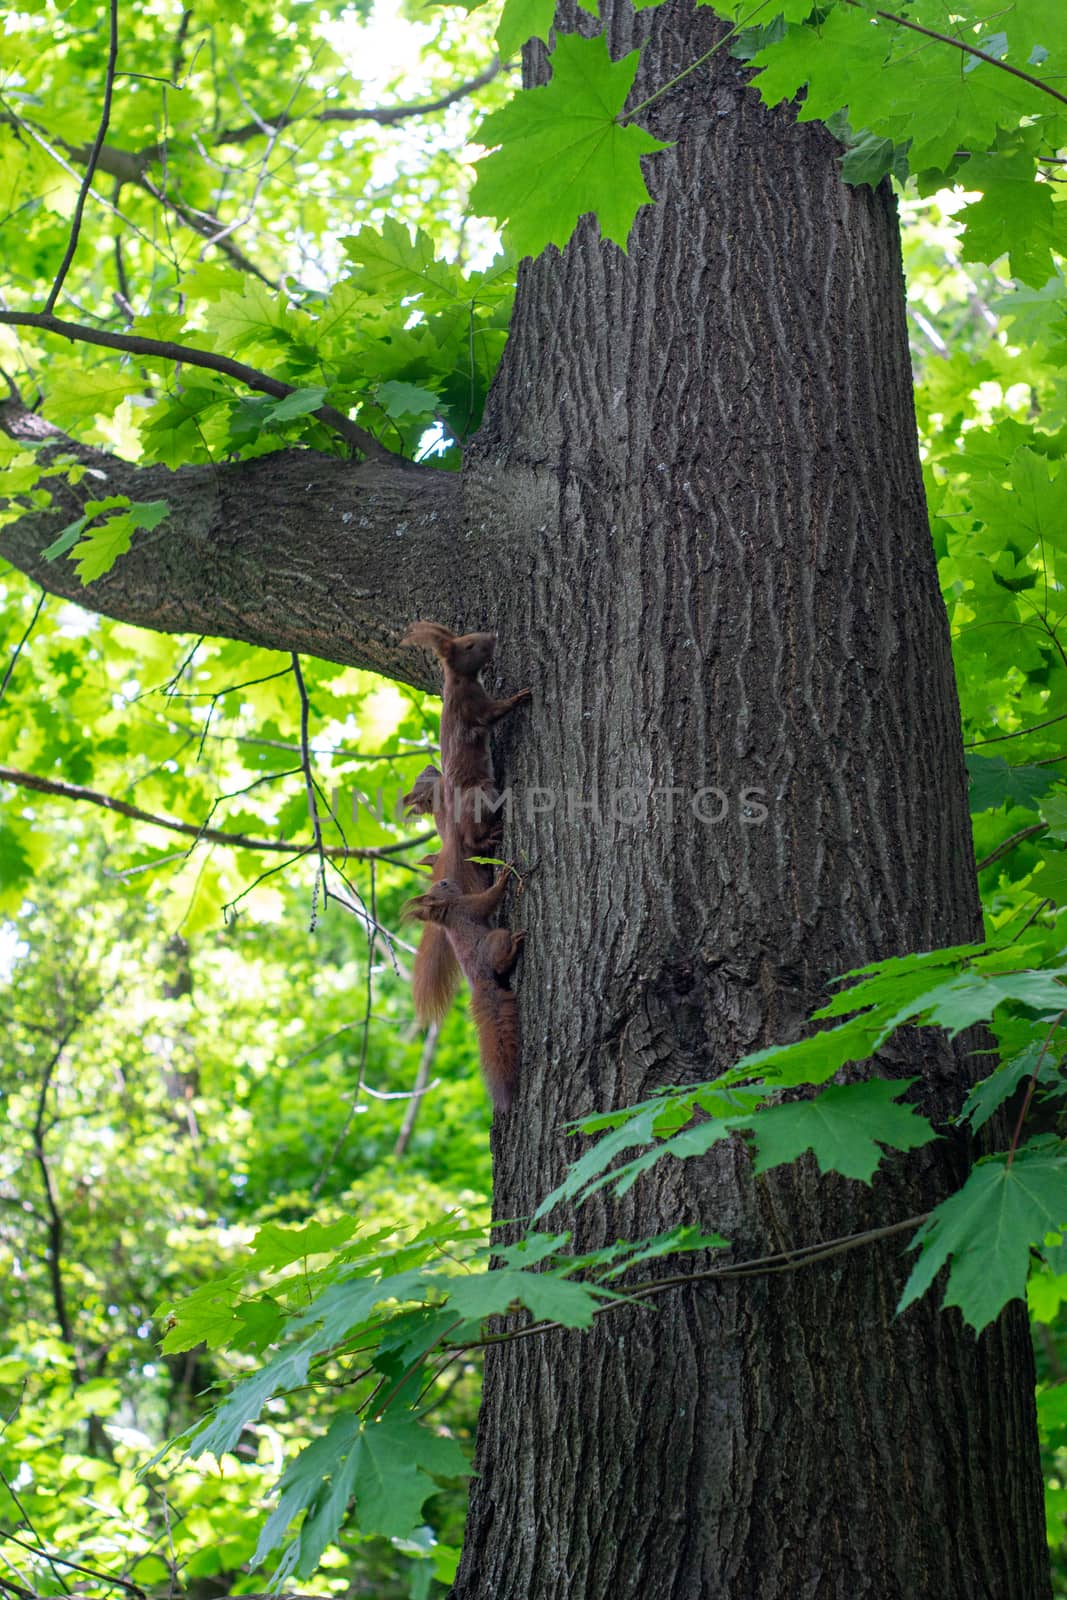 Squirrel family having fun on a tree